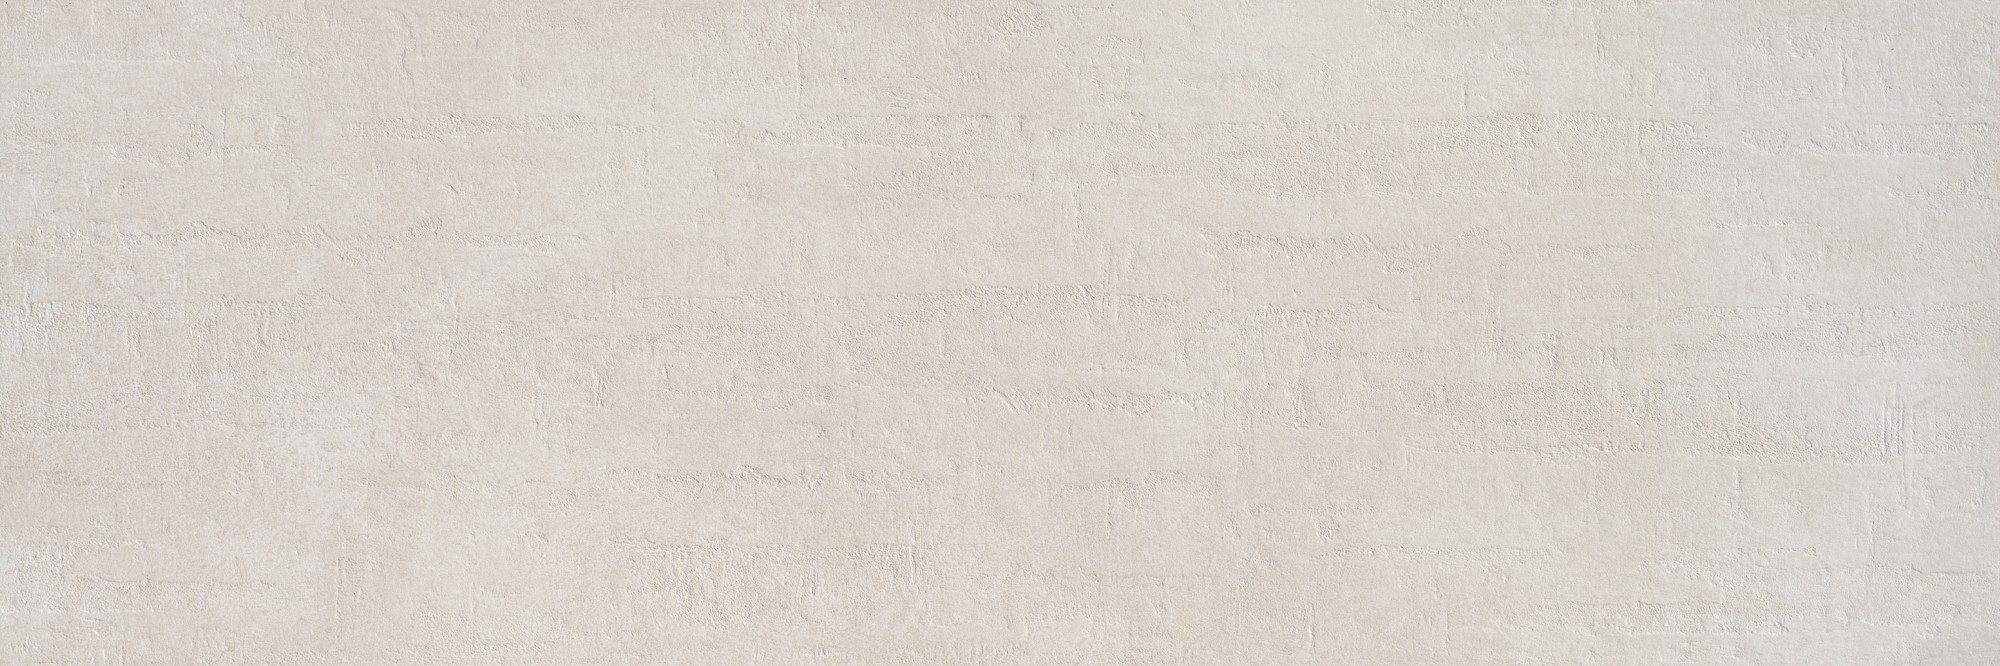 Carrelage Aspect béton Integara blanc mate 40x120 cm